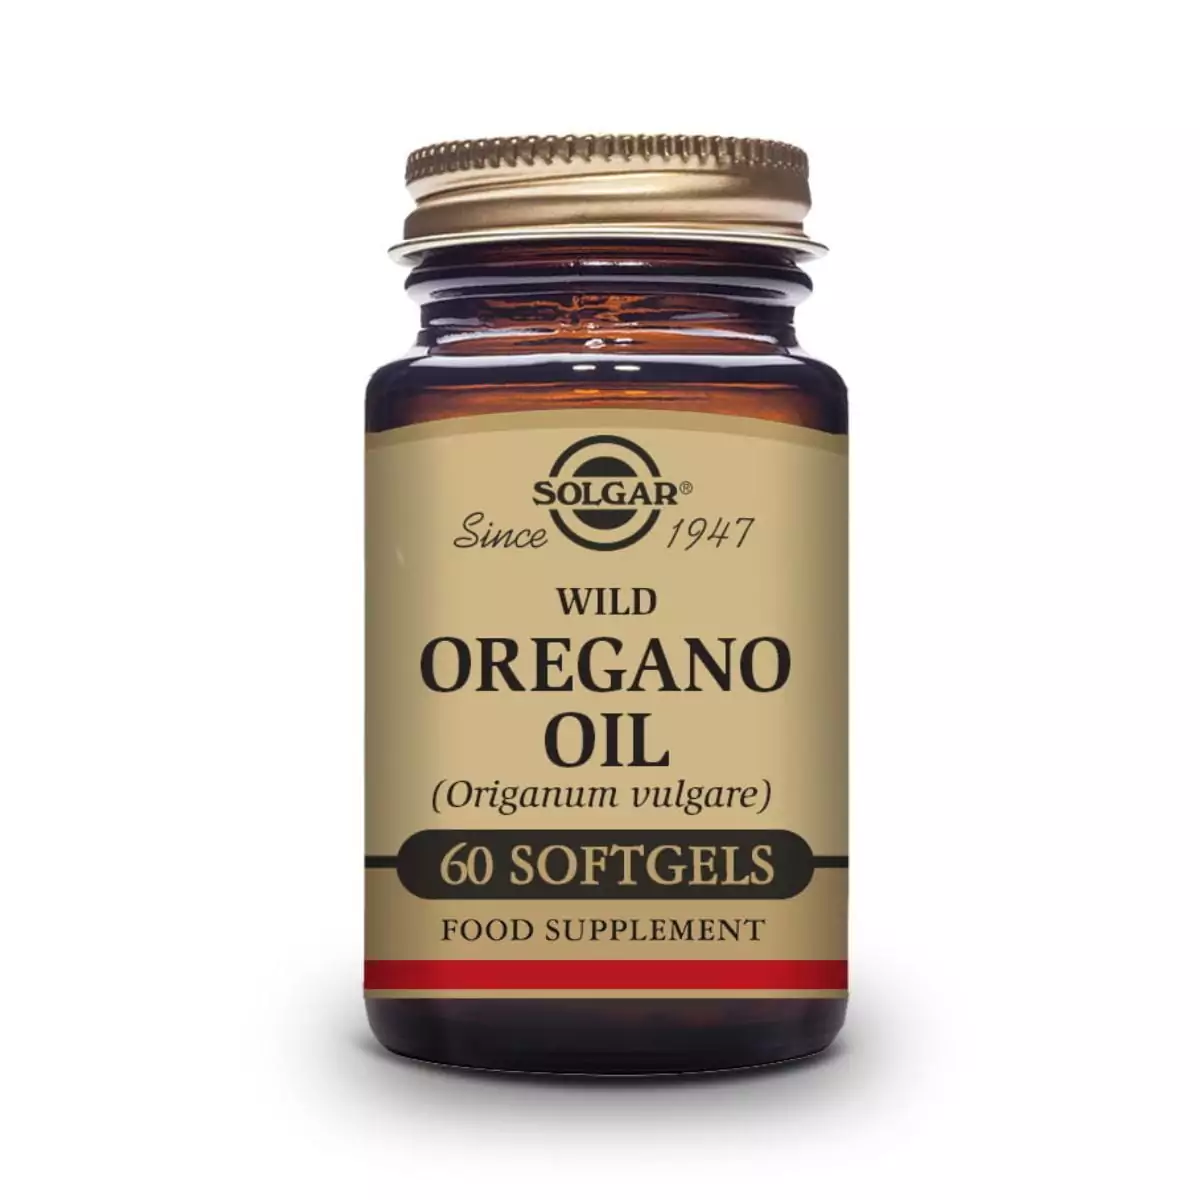 Aceite de Orégano Silvestre – 60 Perlas